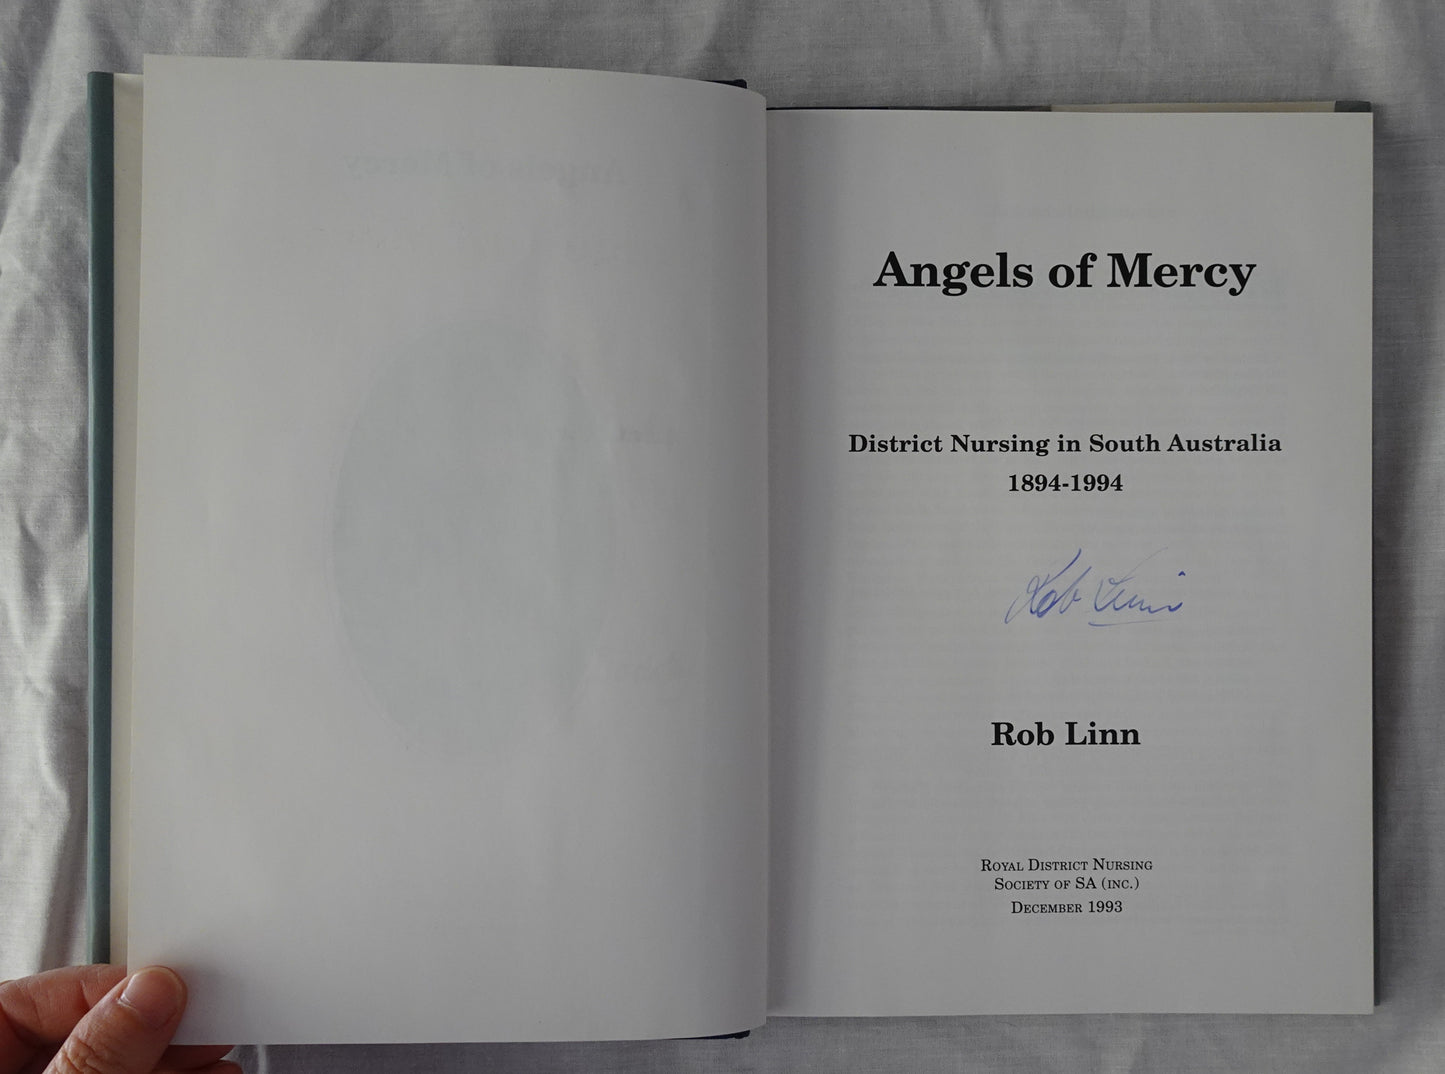 Angels of Mercy by Rob Linn